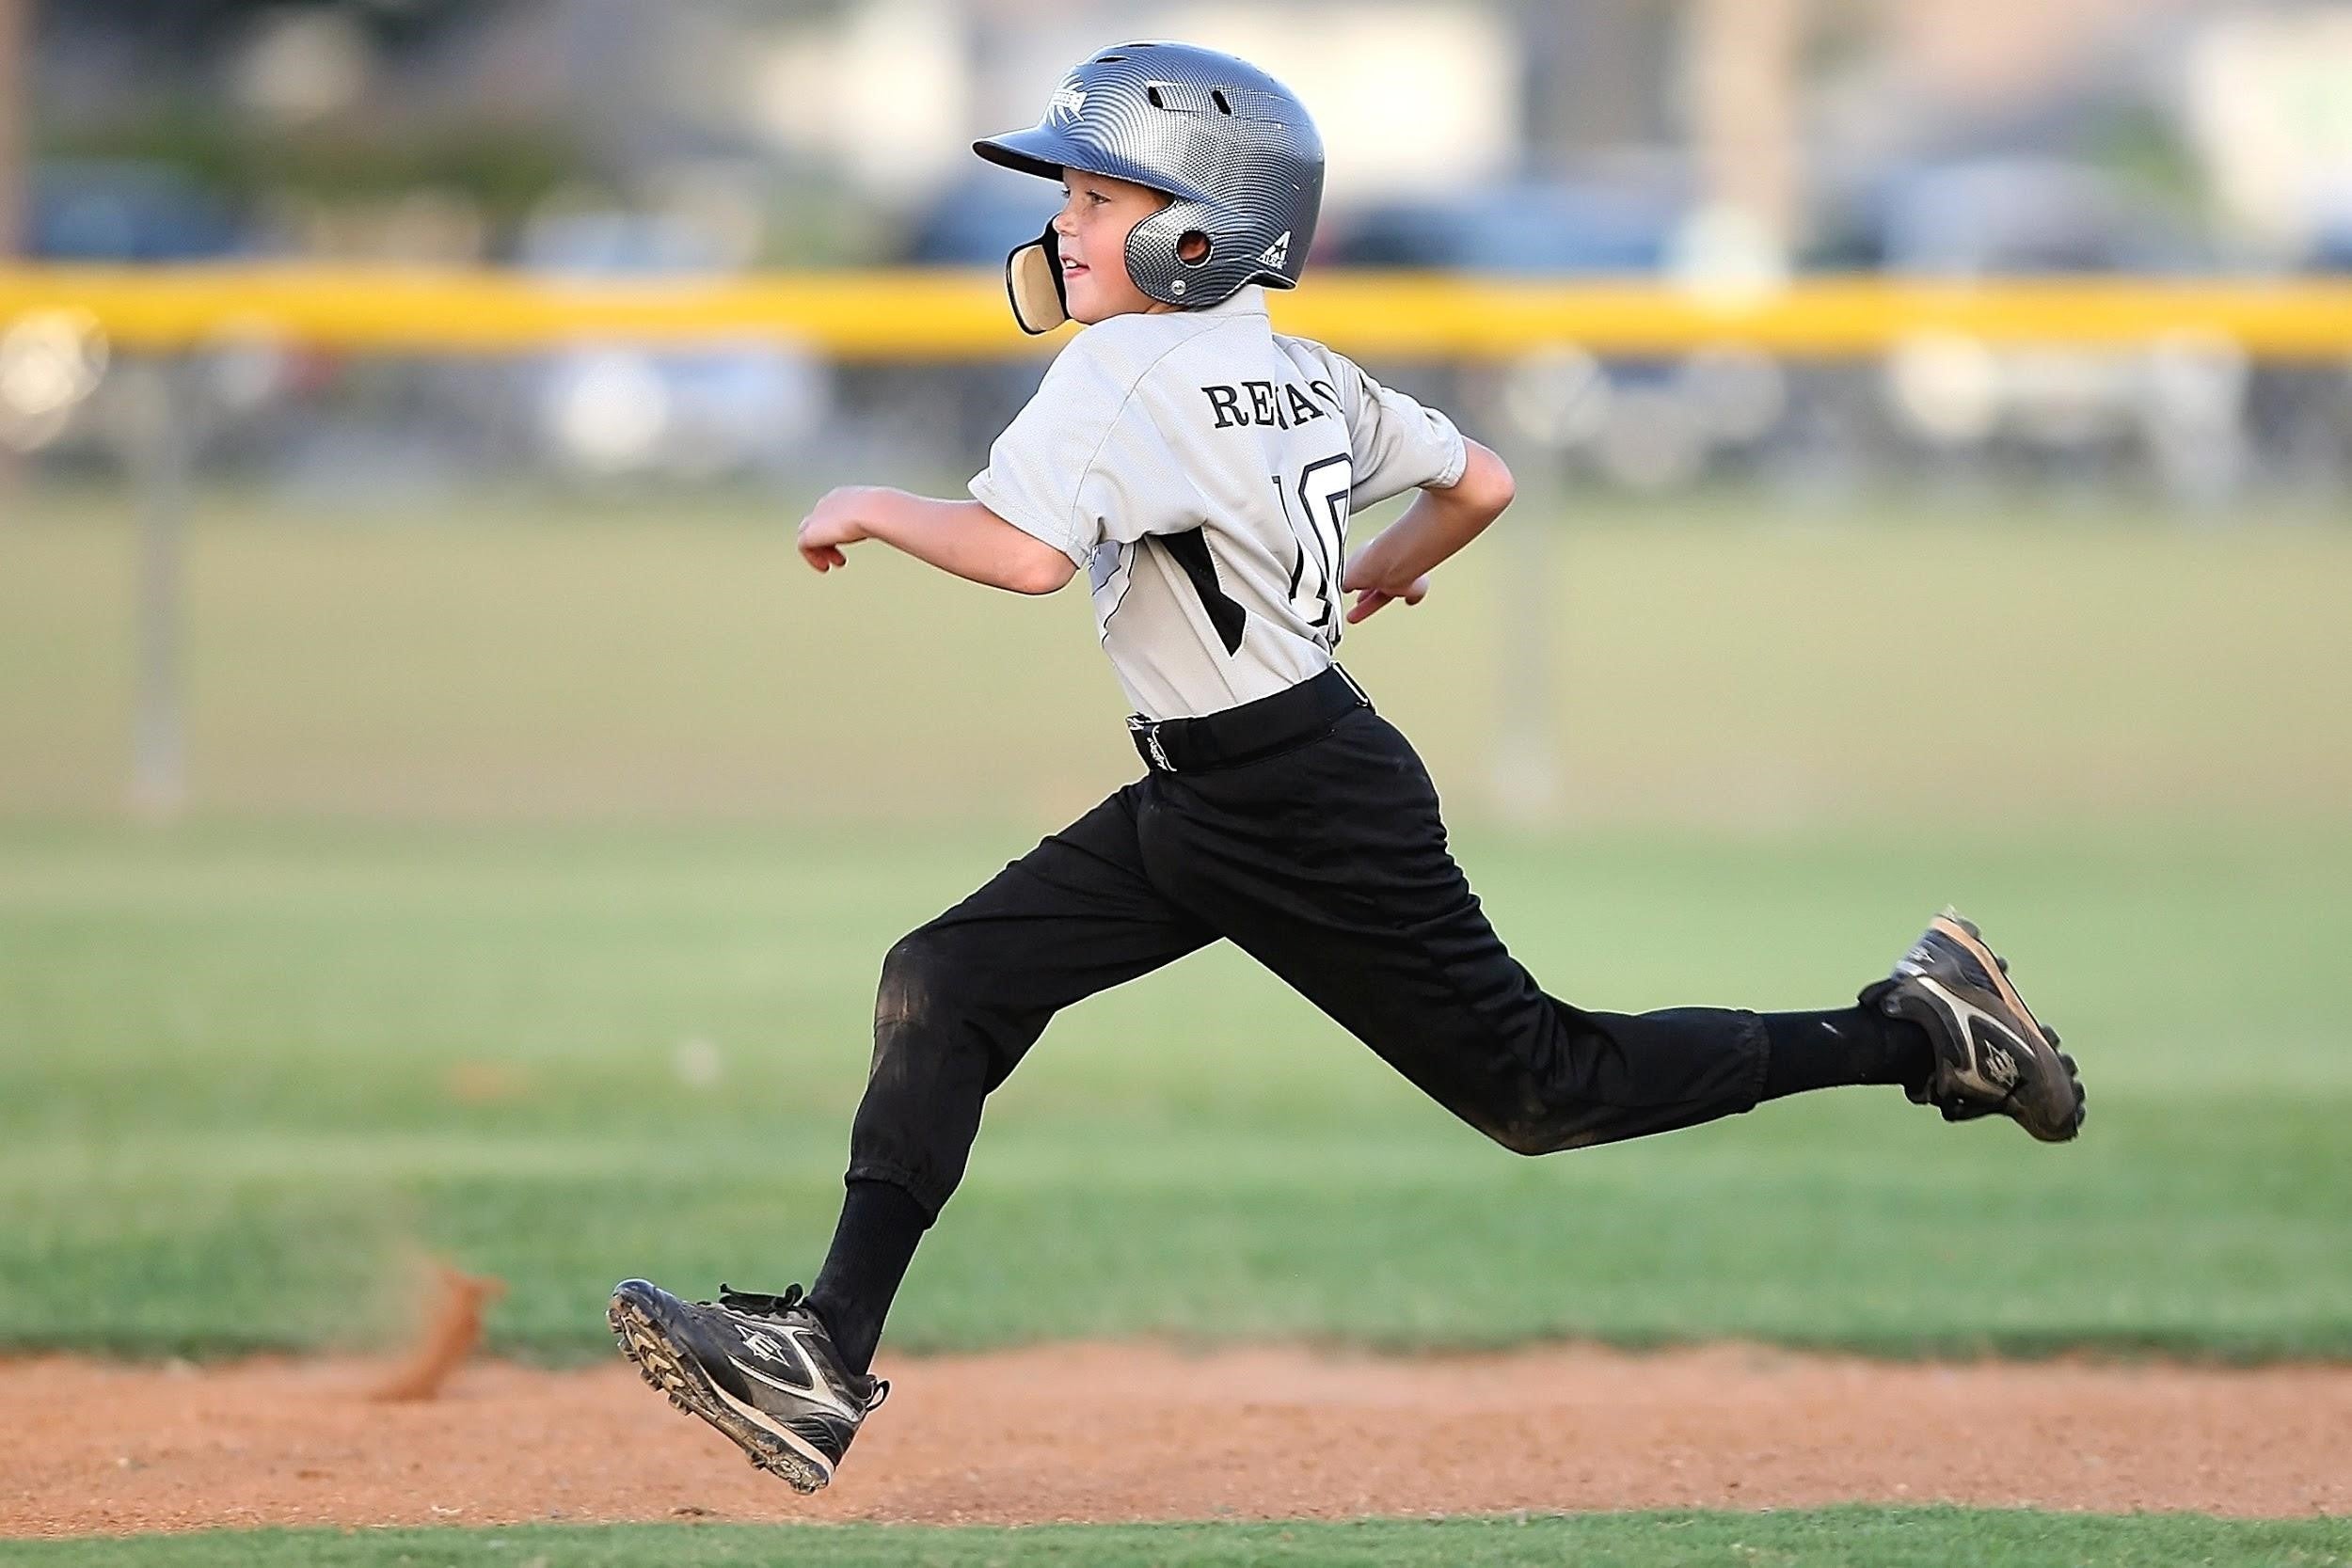 Team Sports to Increase Child's Self-Esteem